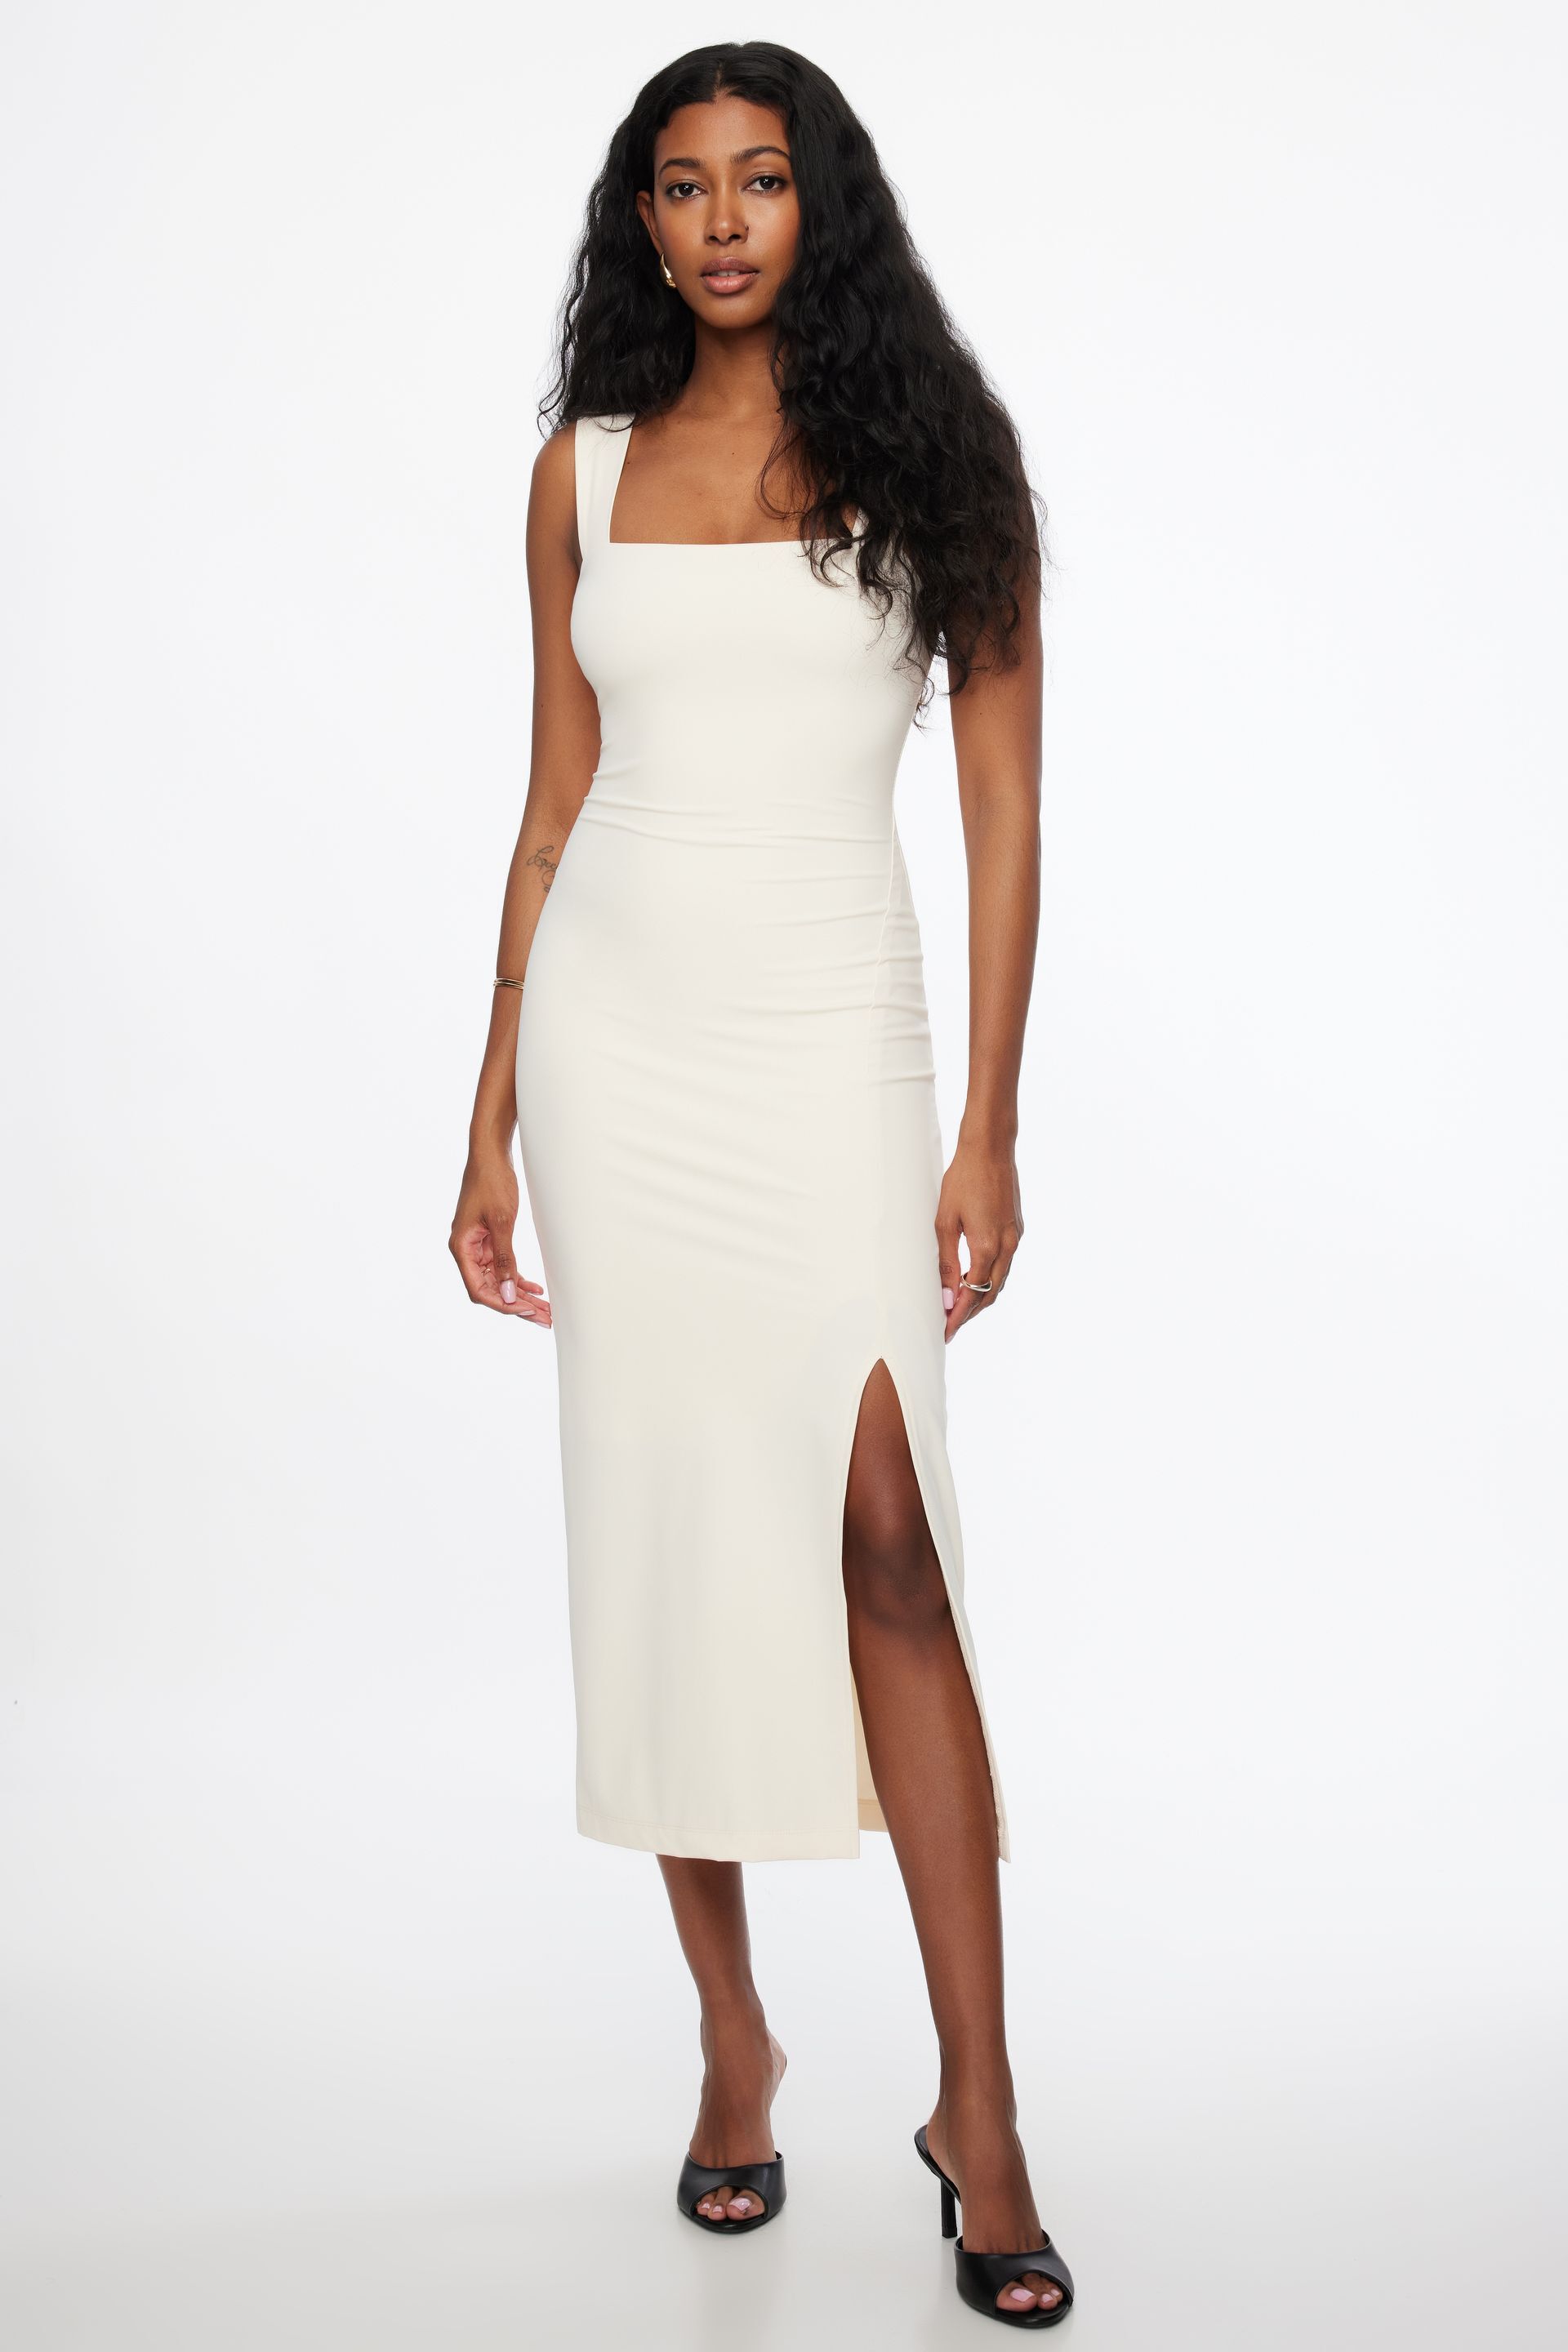 Buy Girls Stylish (V) Neck One-Piece Dress Off-White at Amazon.in